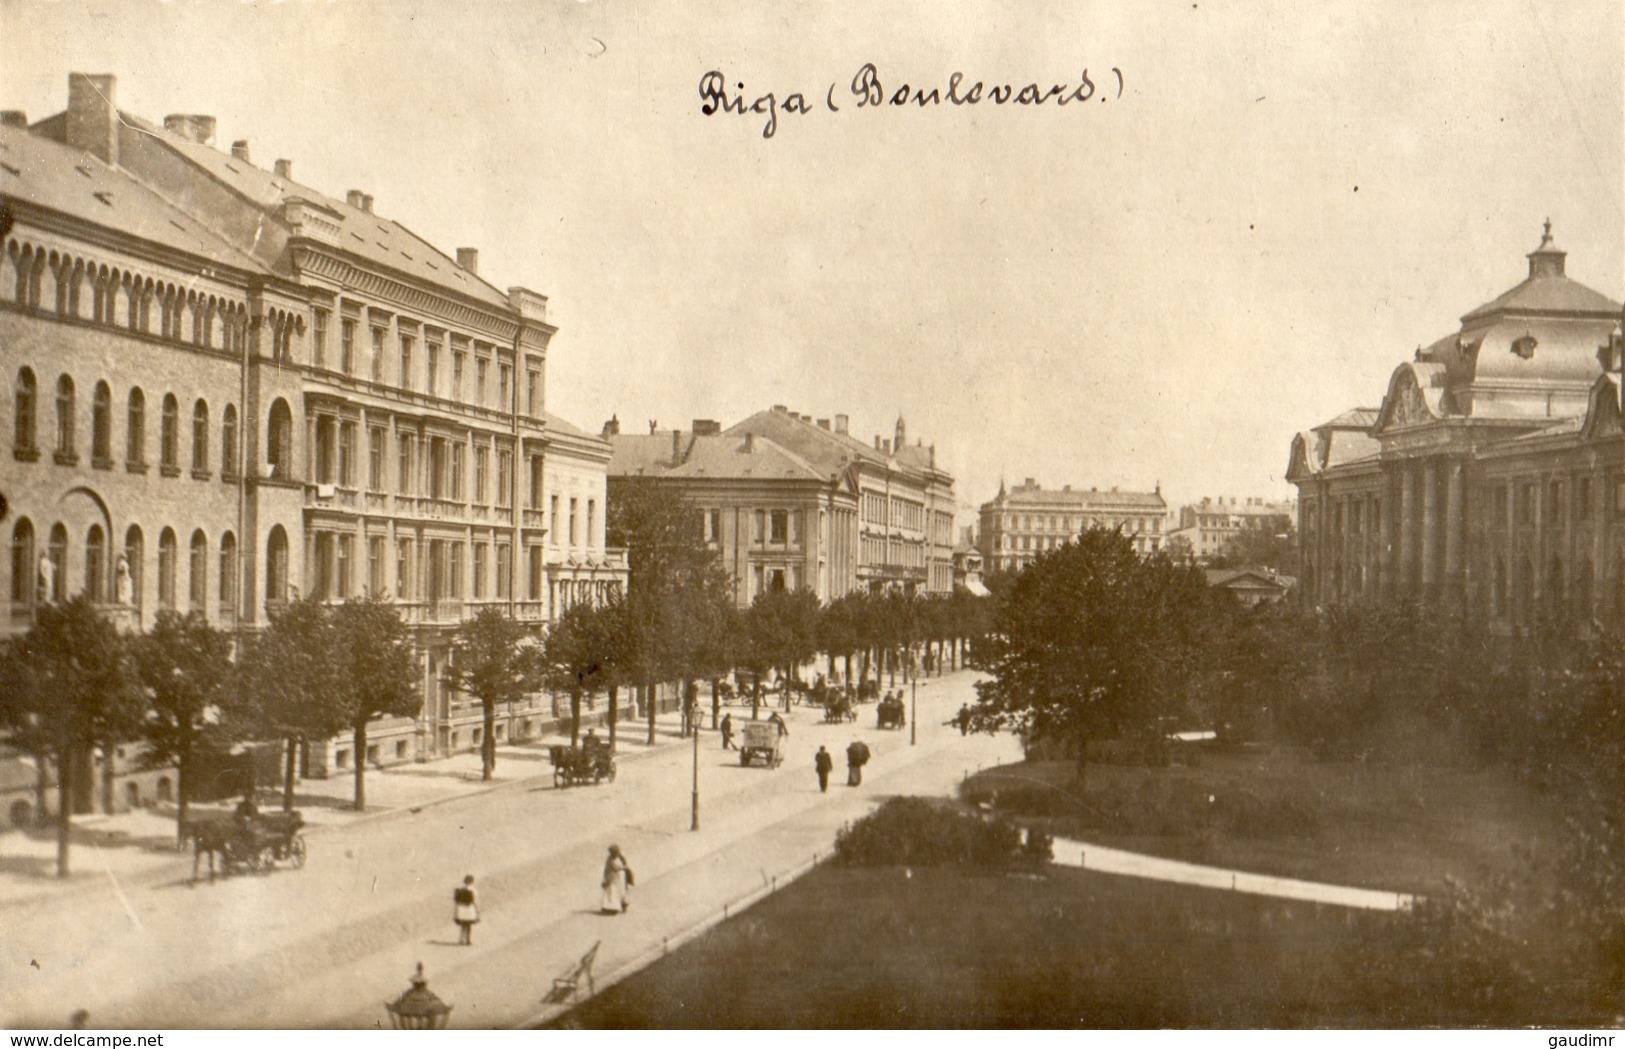 CARTE PHOTO ALLEMANDE DE RIGA EN LETTONIE - UN BOULEVARD DE LA VILLE - BALTIQUE - GUERRE 1914 1918 - 1914-18